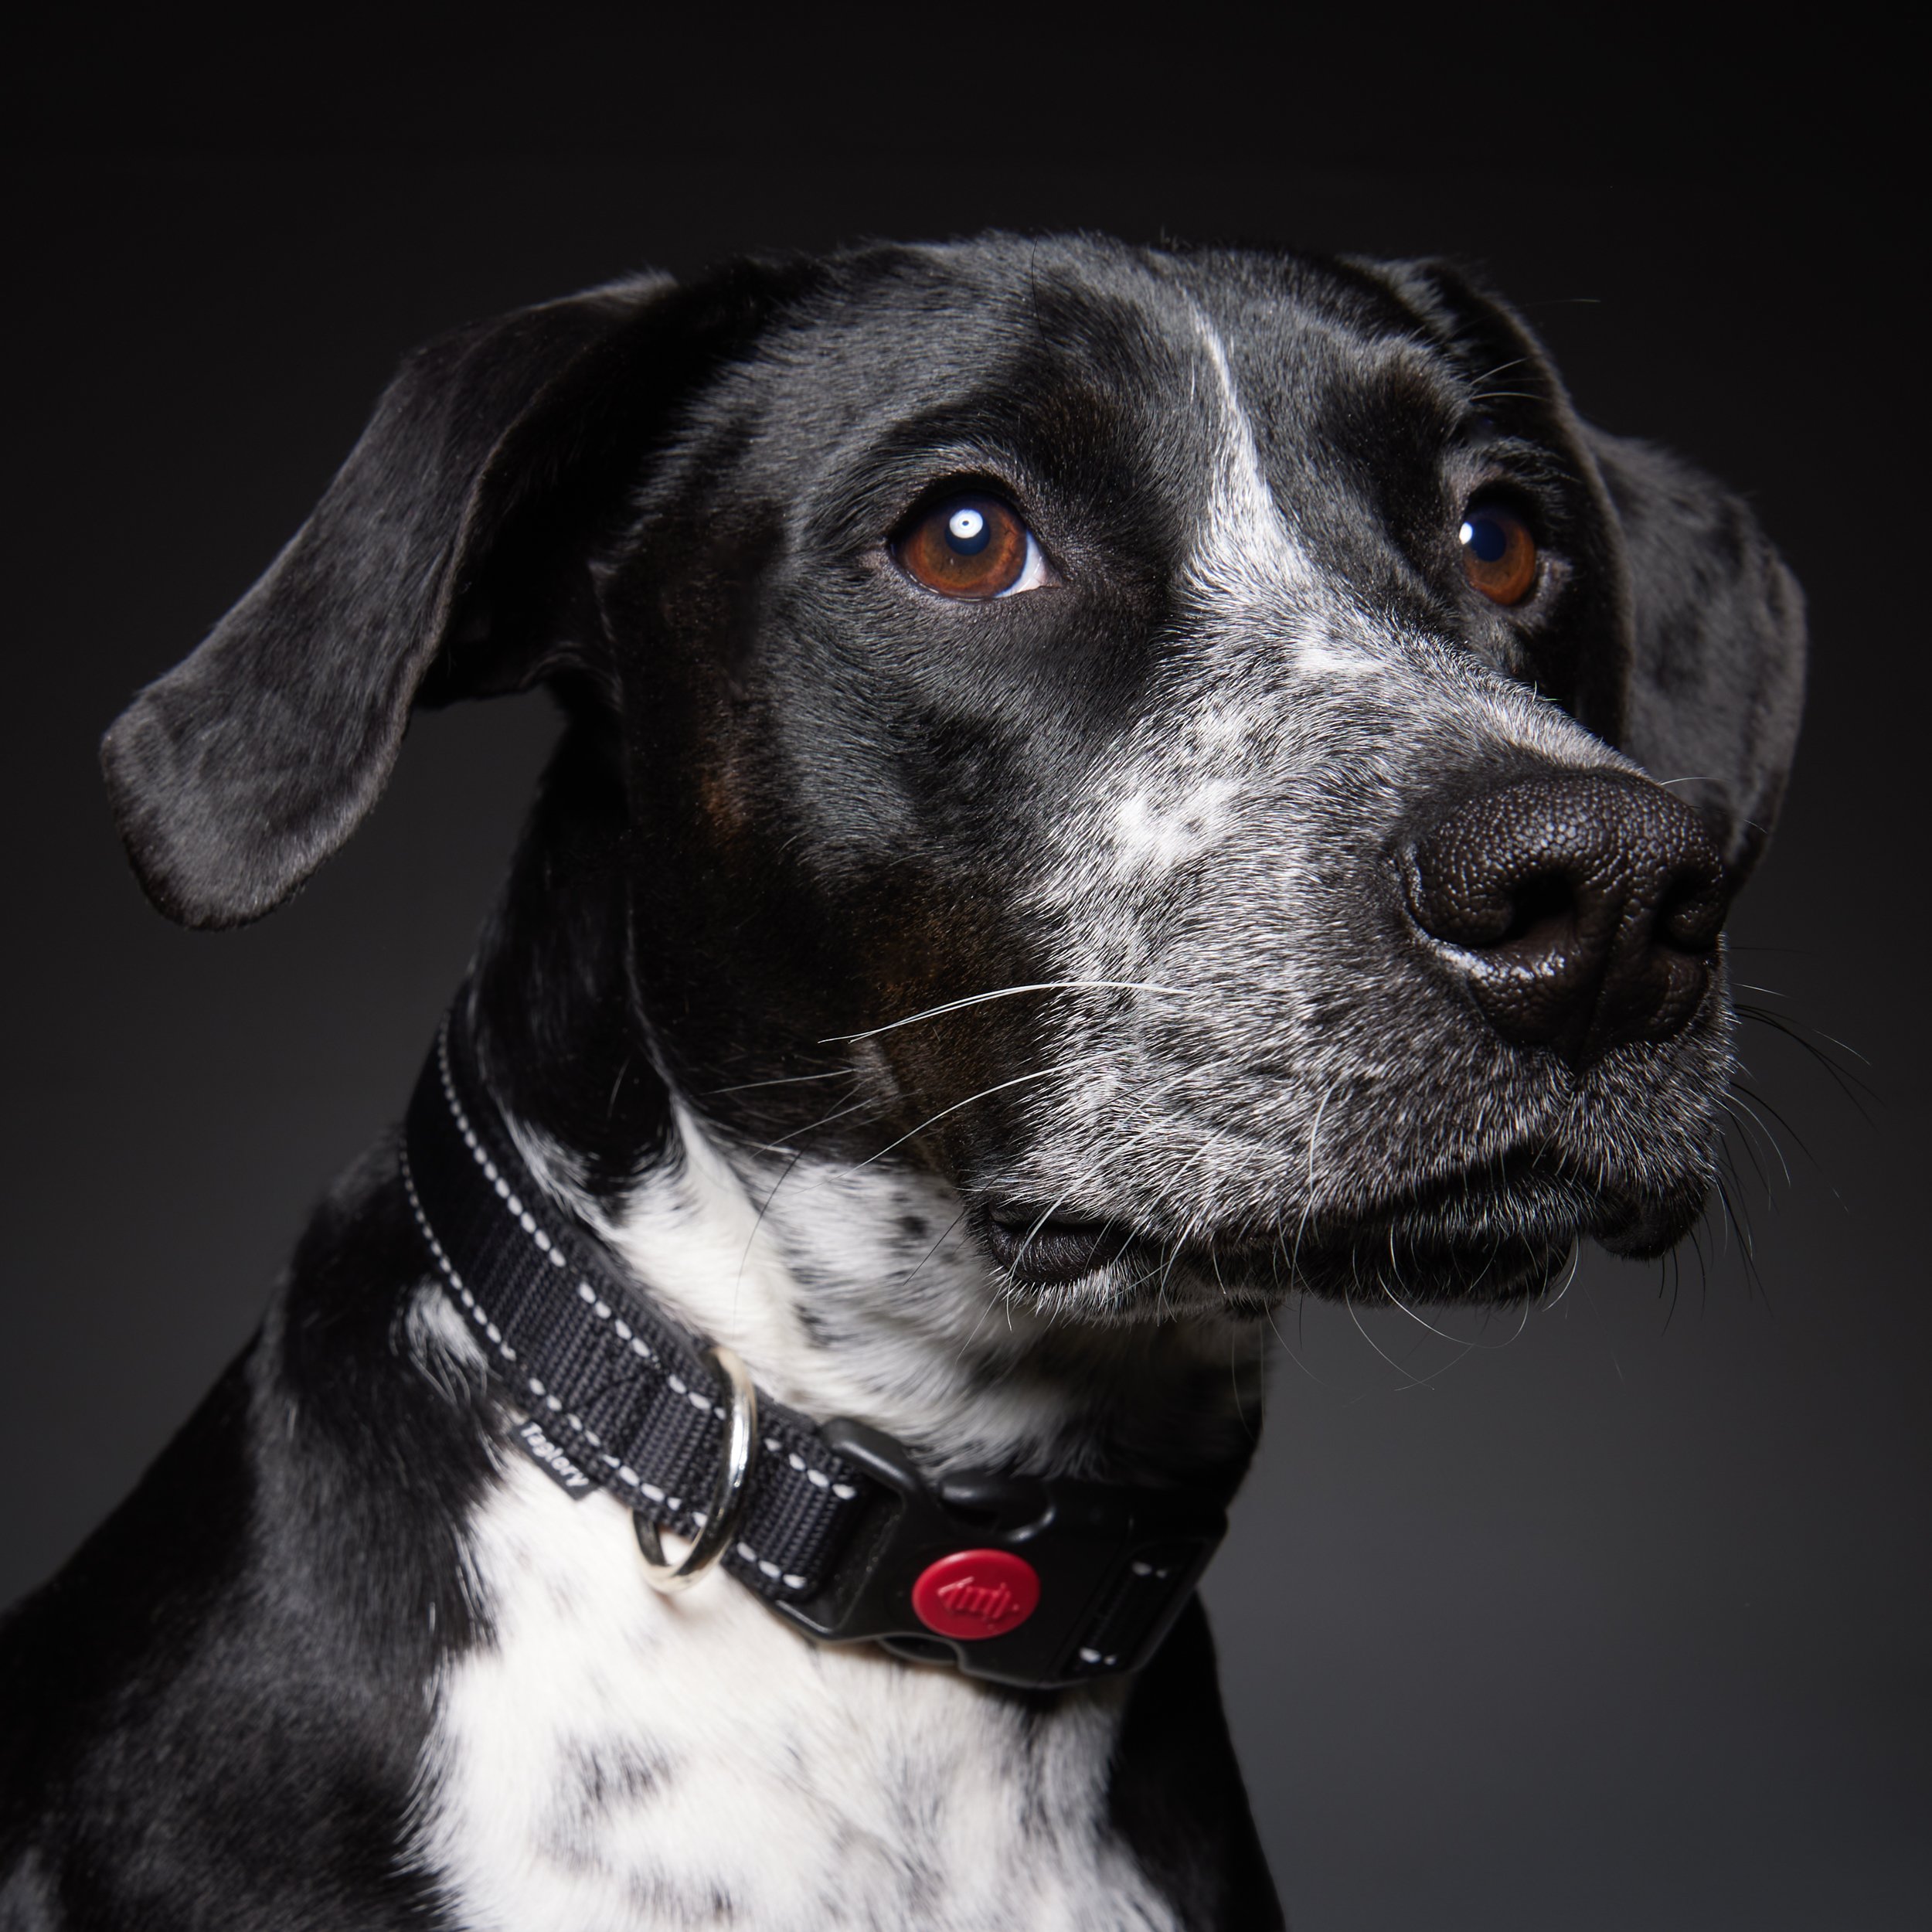 josey wales dog portraits (4 of 6).jpg